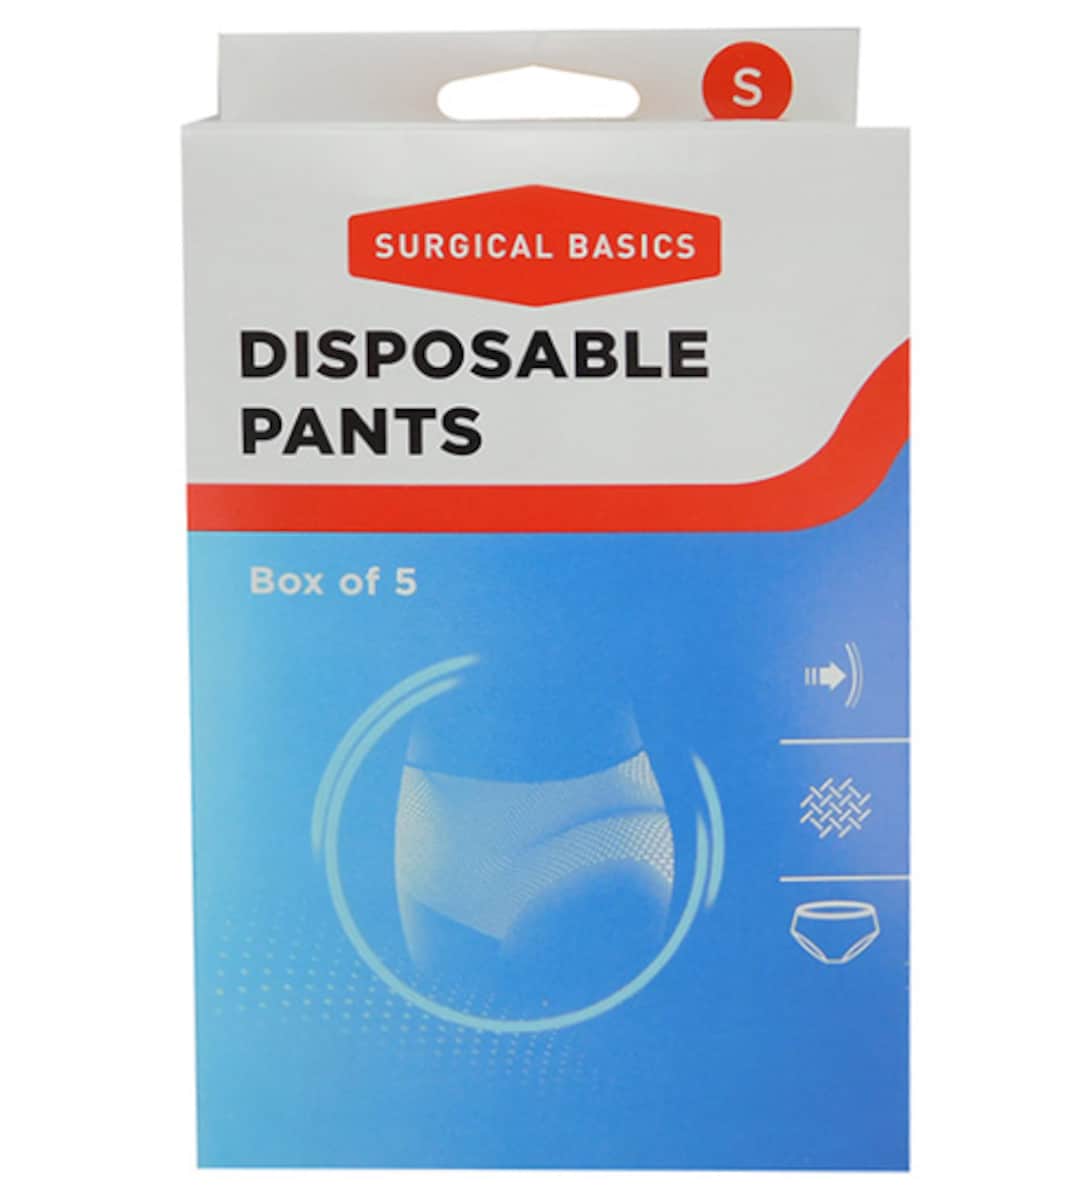 Surgical Basics Disposable Pants Small Box of 5